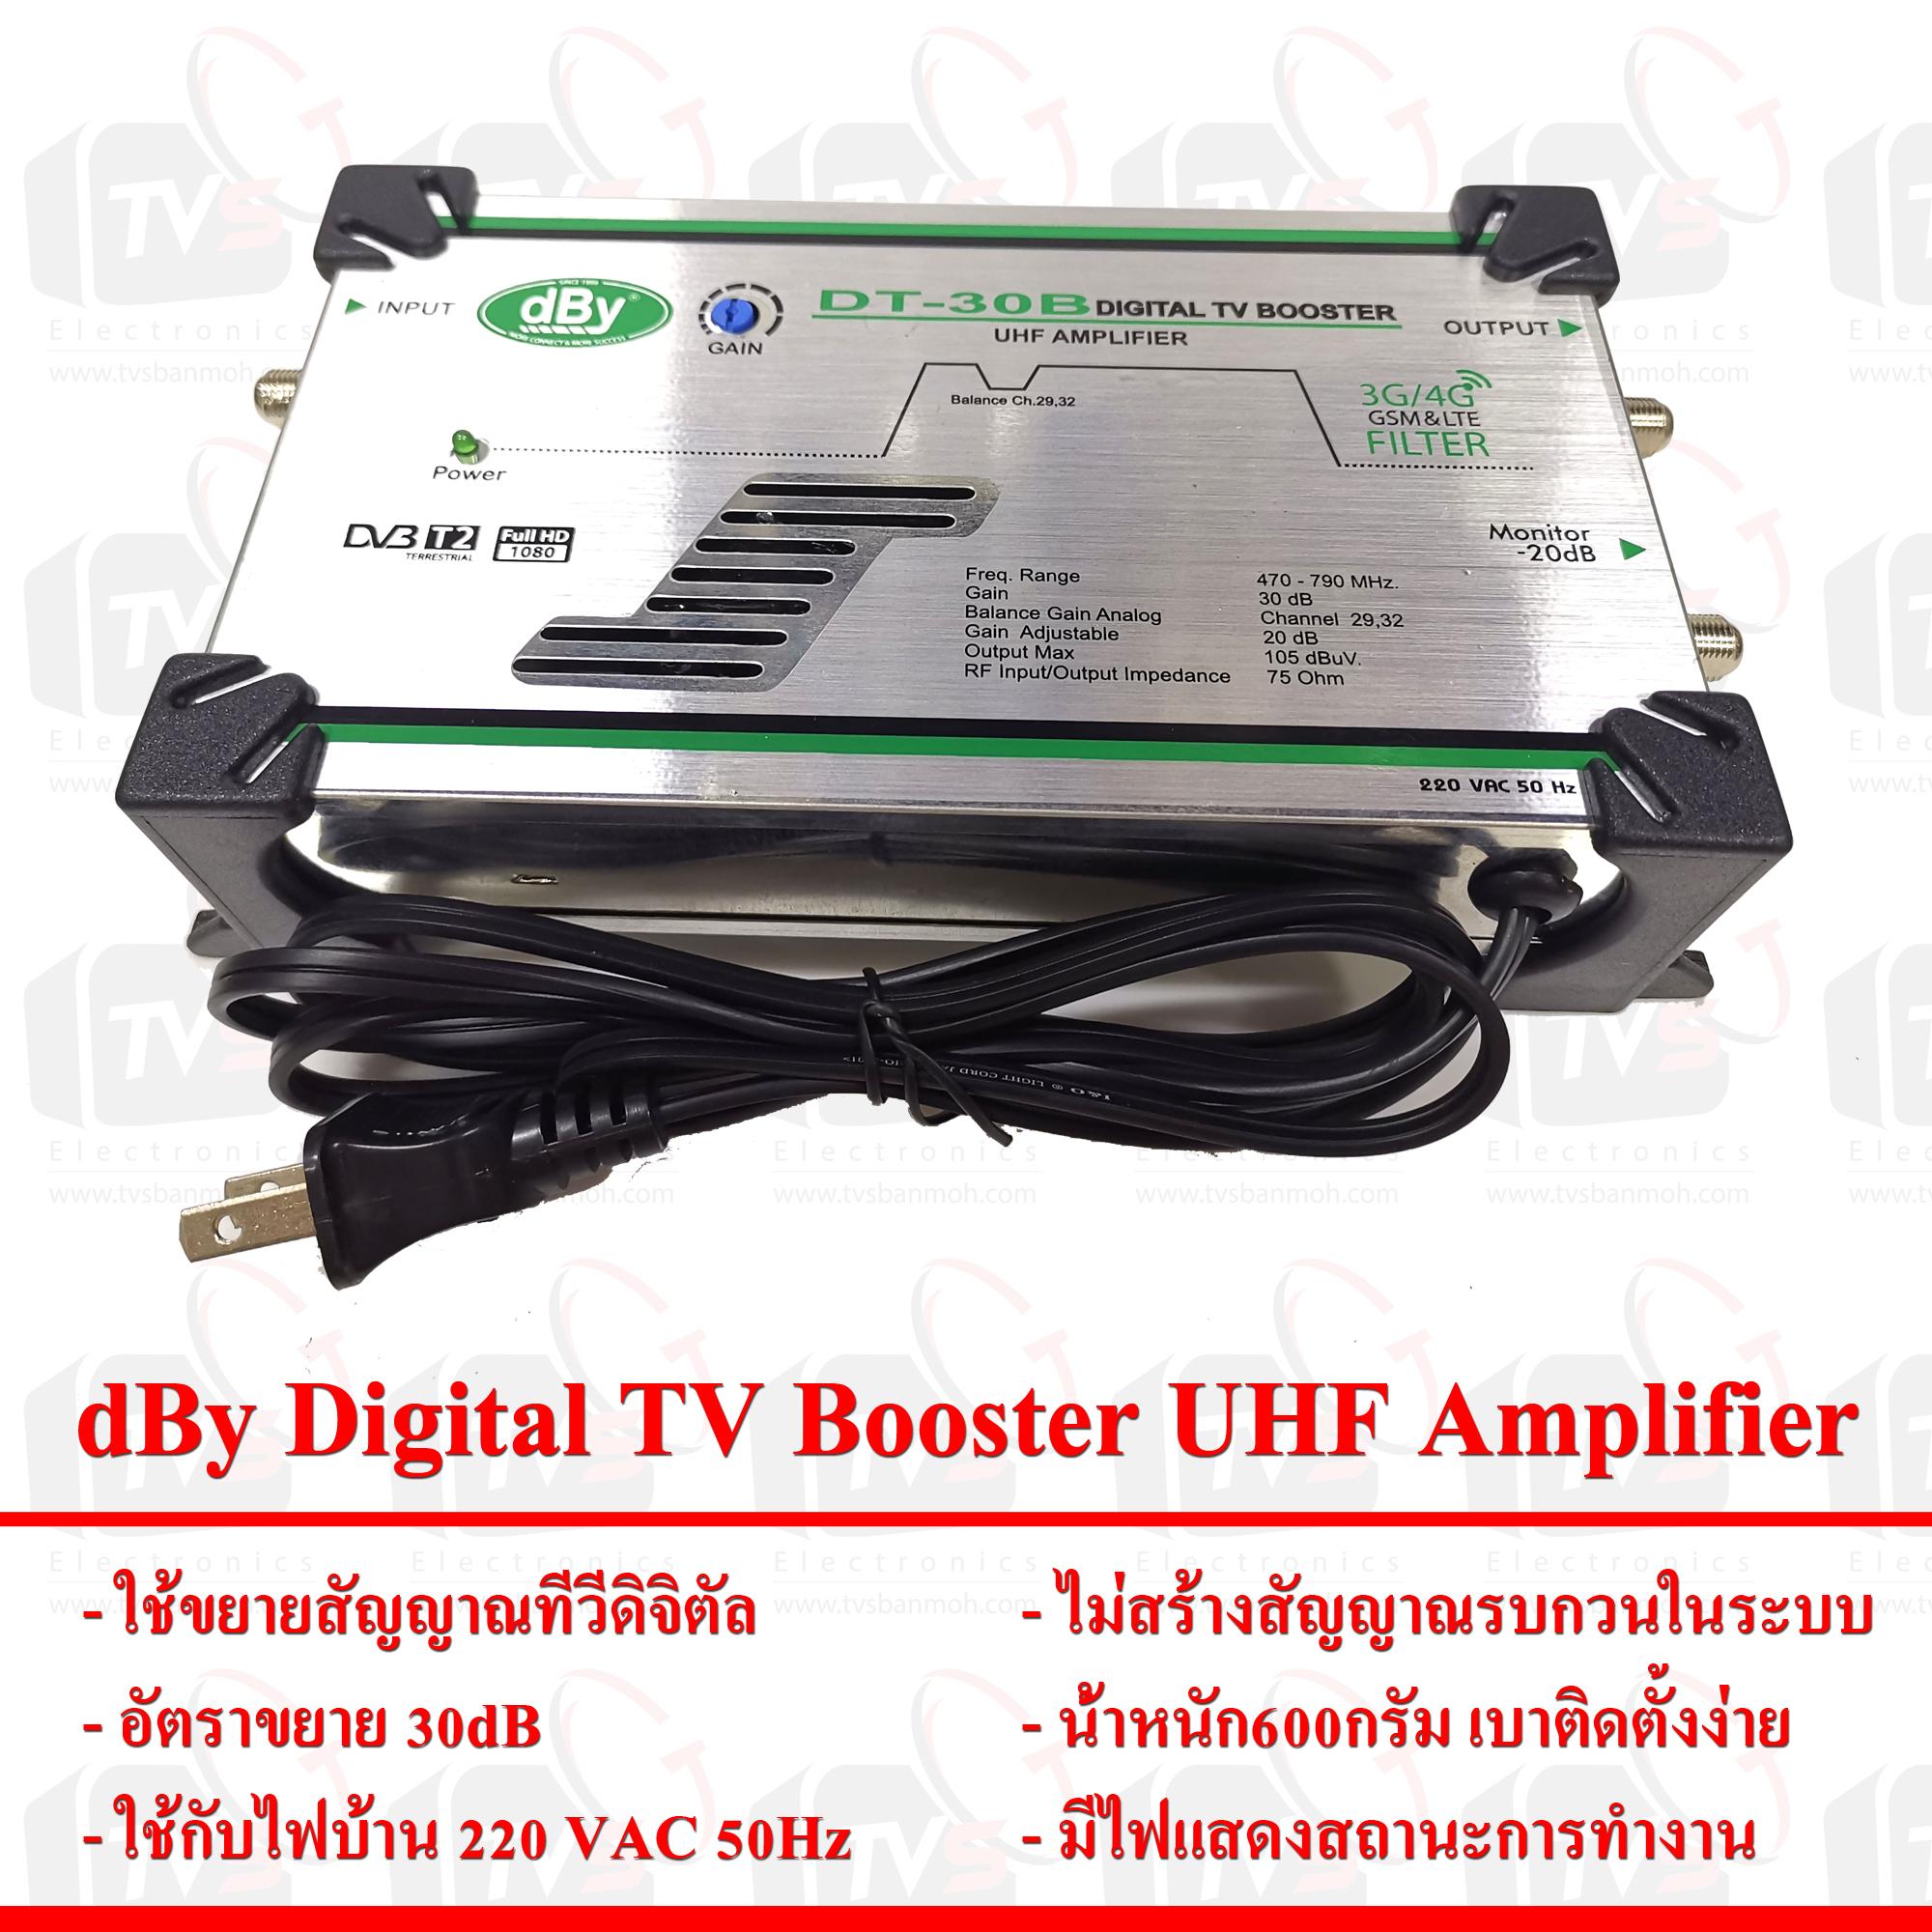 dBy Digital TV Booster UHF Amplifier ใช้ขยายสัญญาณทีวีดิจิตัล 30dB